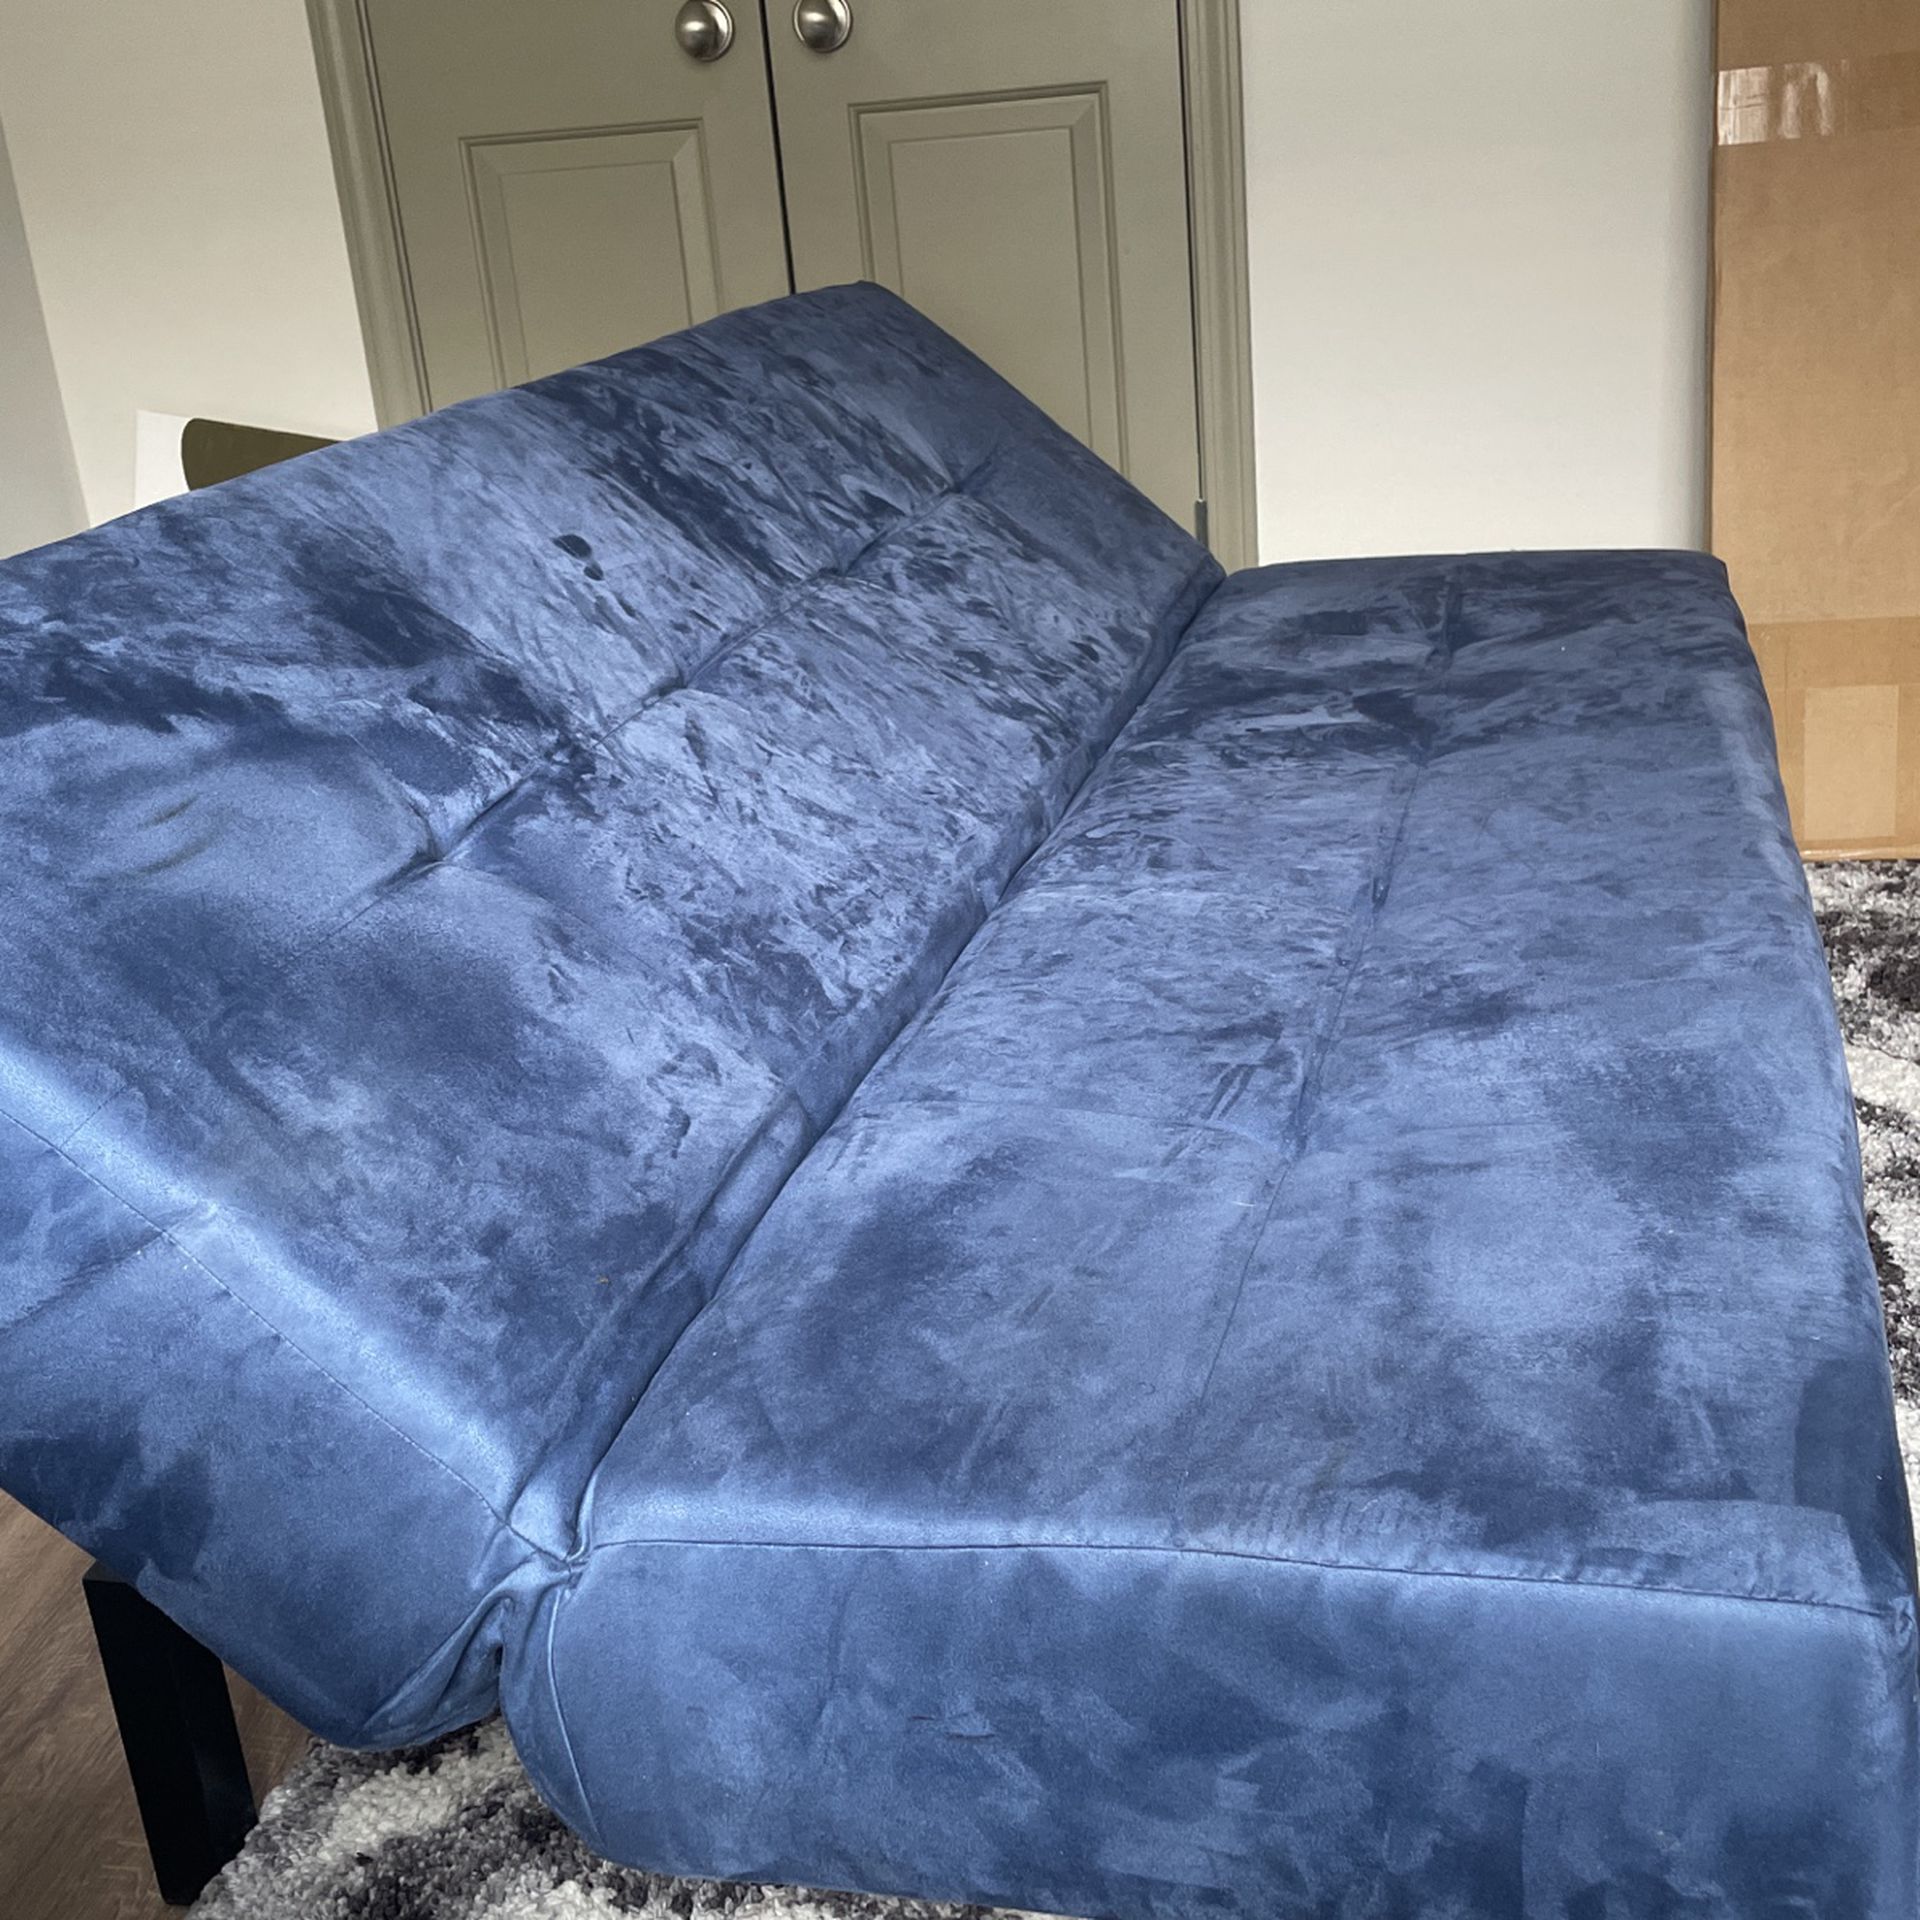 Balkarp Sleeper Sofa Futon For